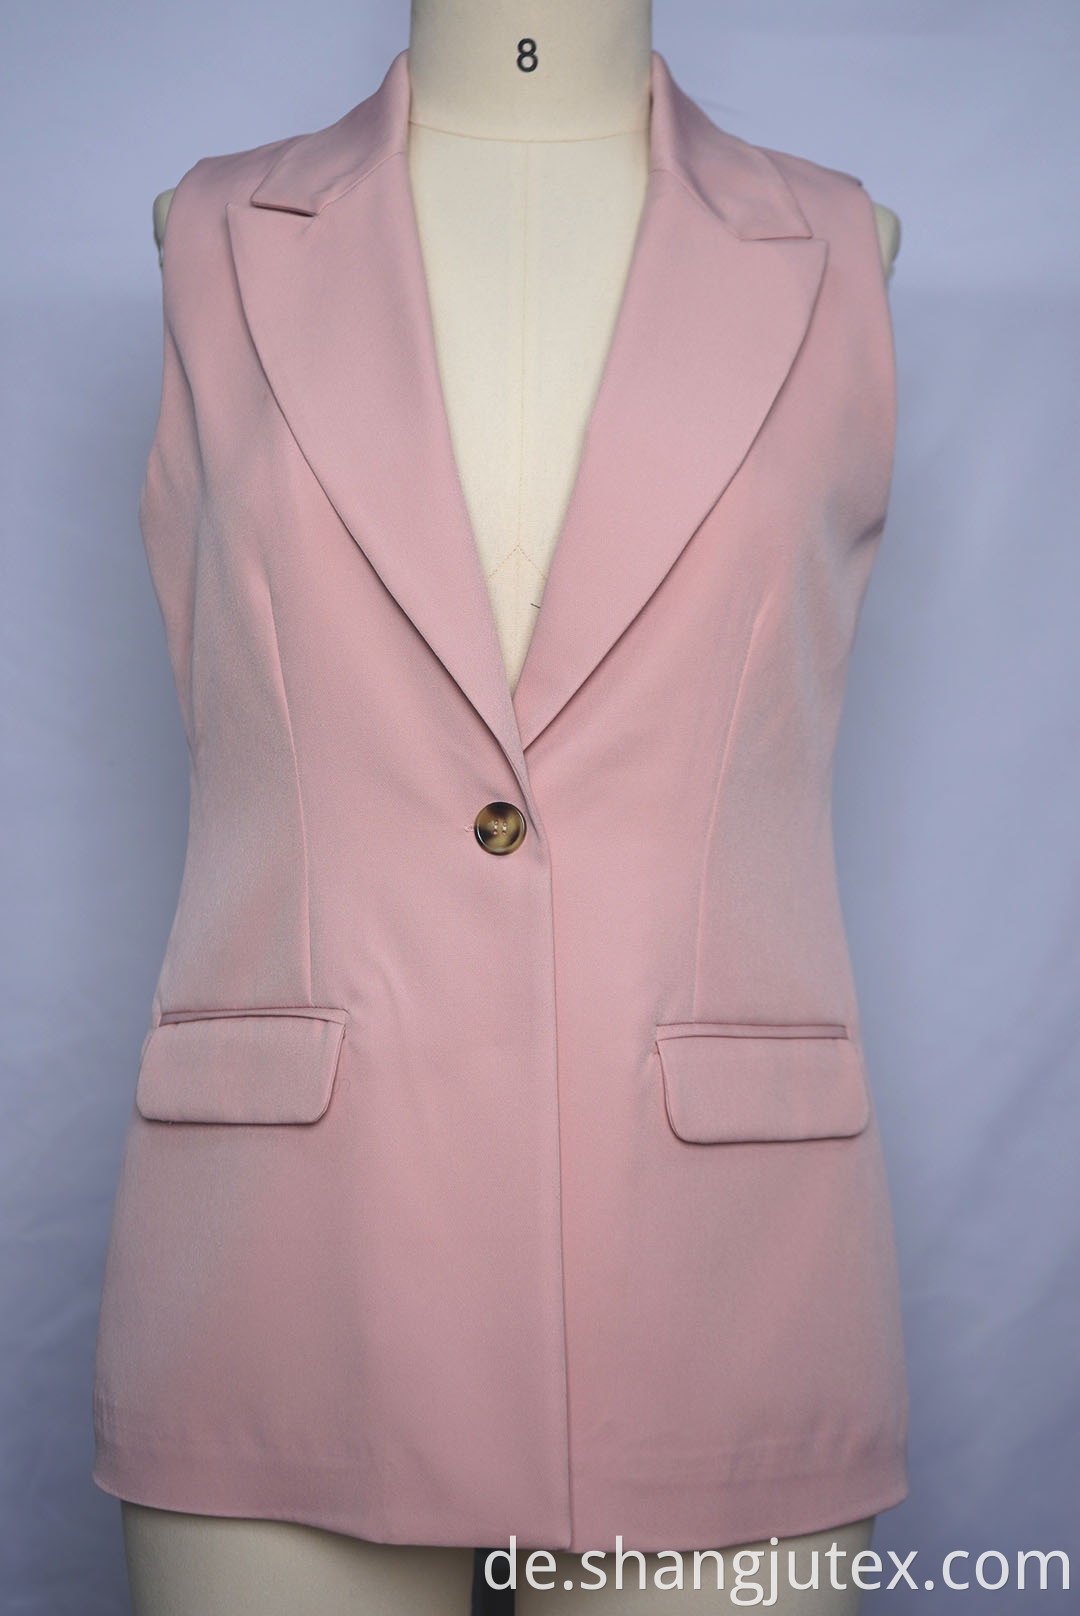 color pink of jacket